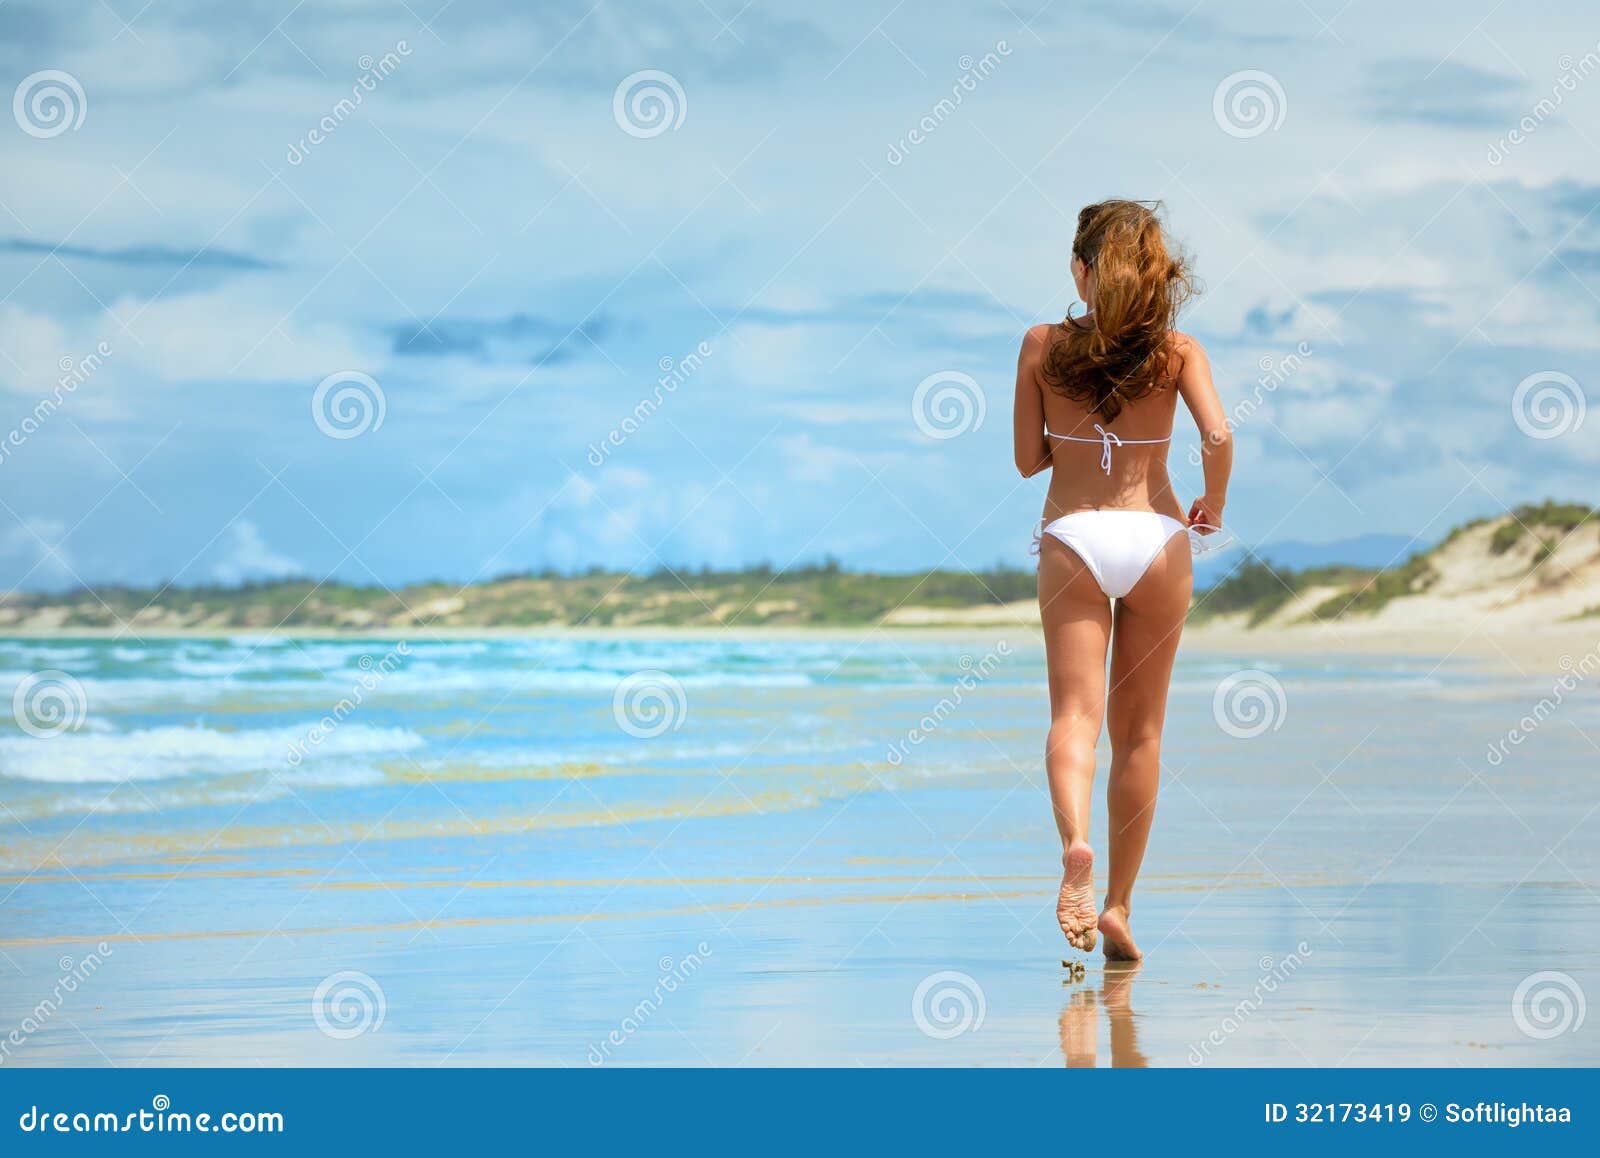 A Woman Running Along The Beach In A White Bikini Royalty Free Stock